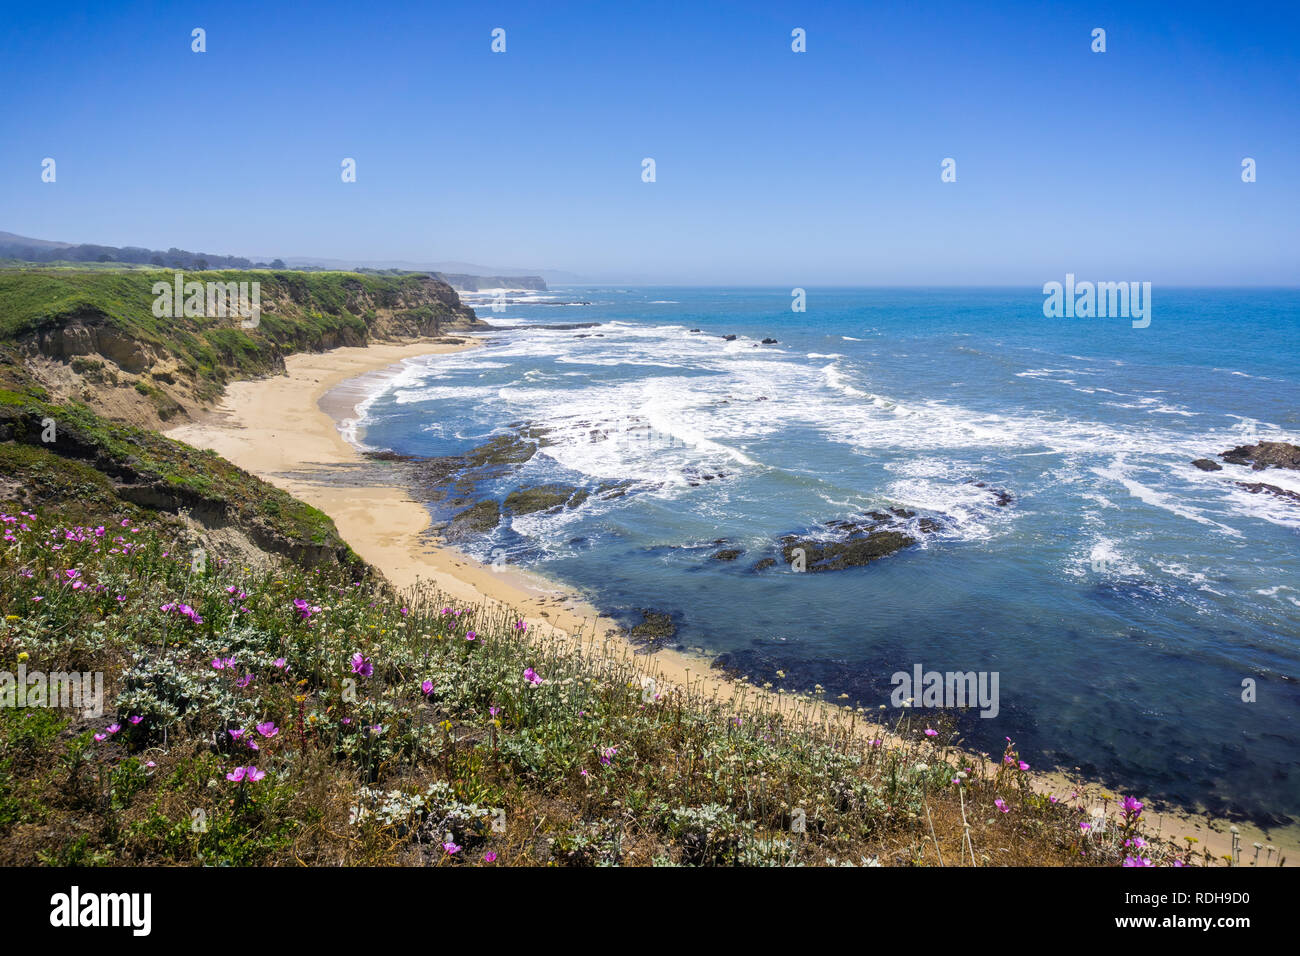 Cliffs and sandy beach on the Pacific Ocean coastline near Half Moon Bay, California Stock Photo